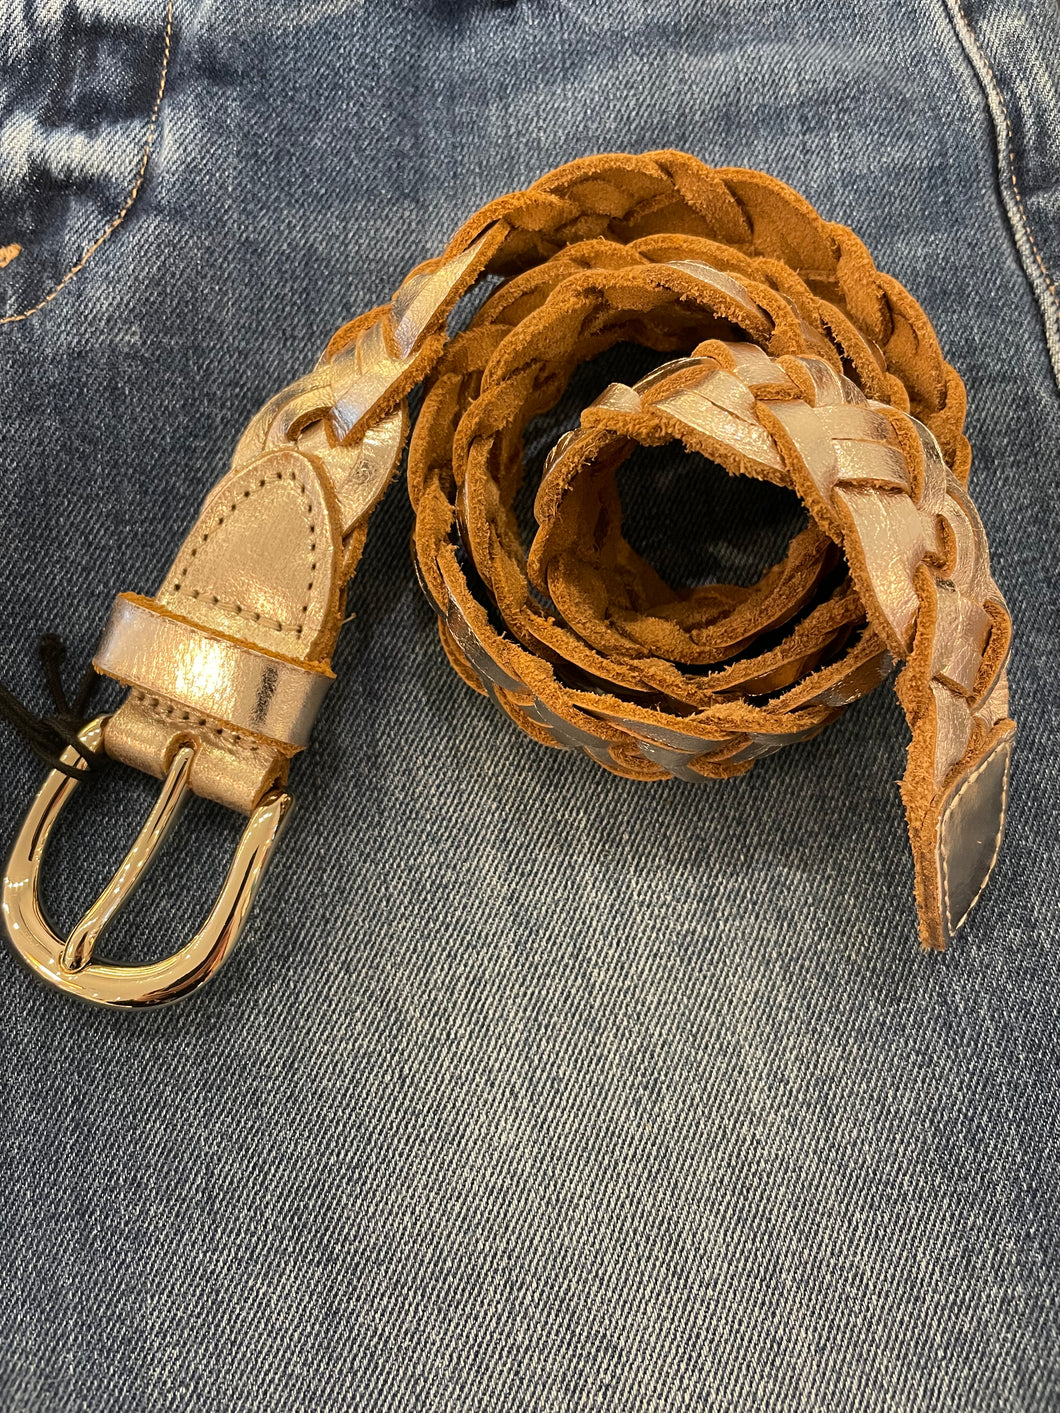 Vanzetti - Gold Braided Leather Belt